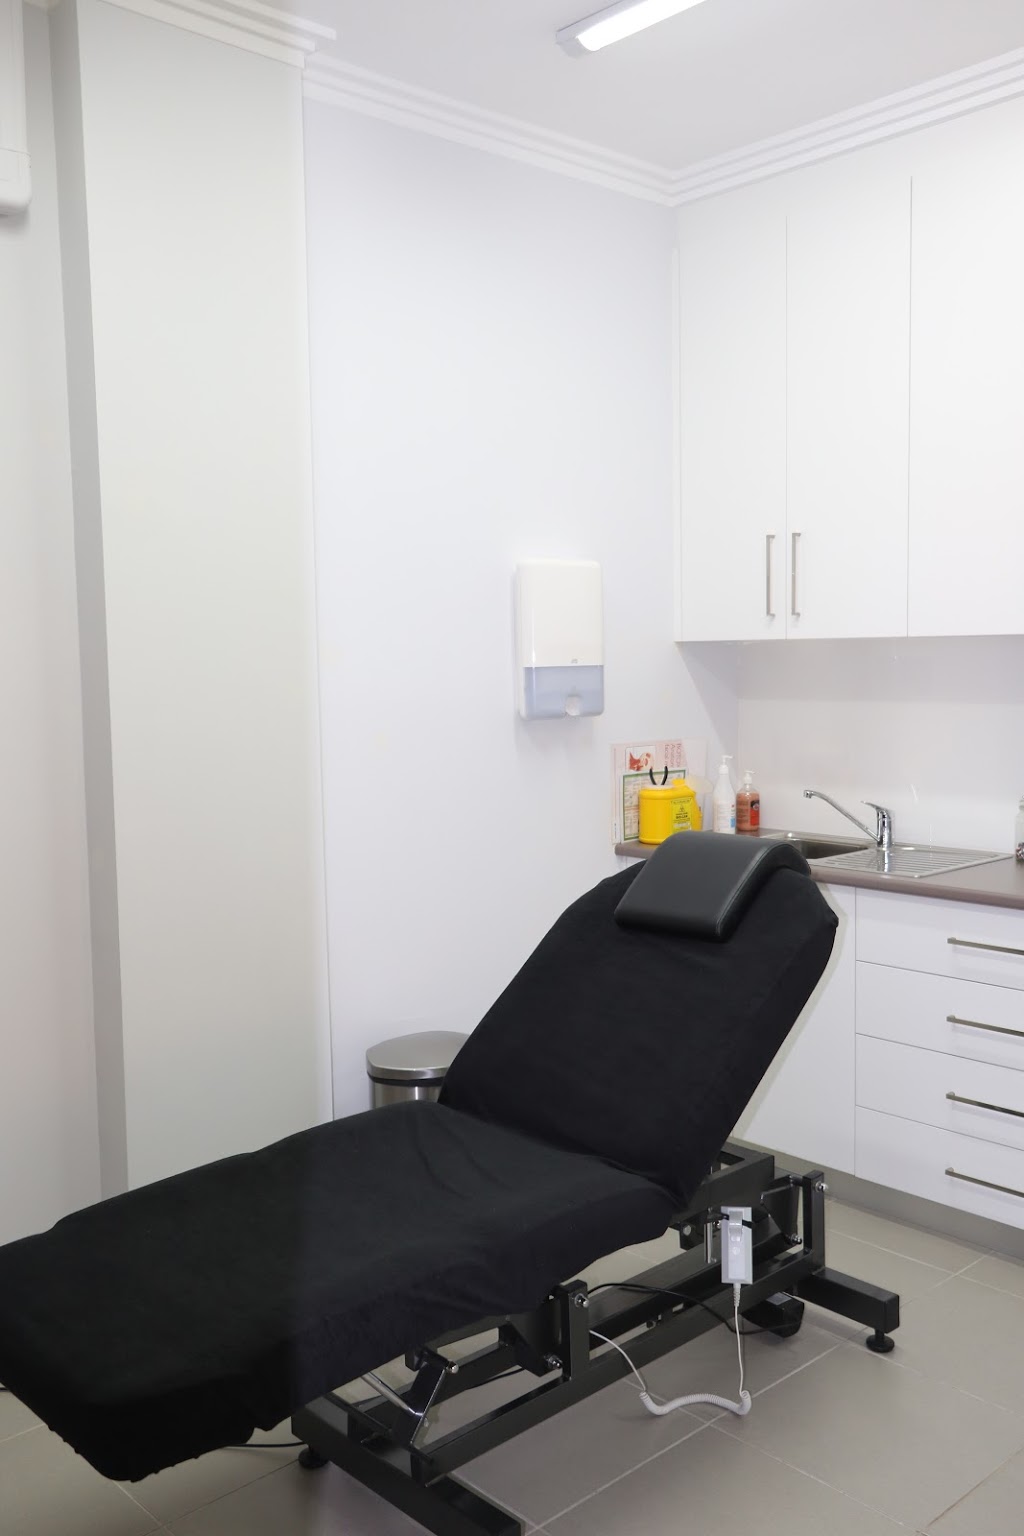 Kis Cosmetic Clinic | health | 213 Homer St, Earlwood NSW 2206, Australia | 0295583222 OR +61 2 9558 3222